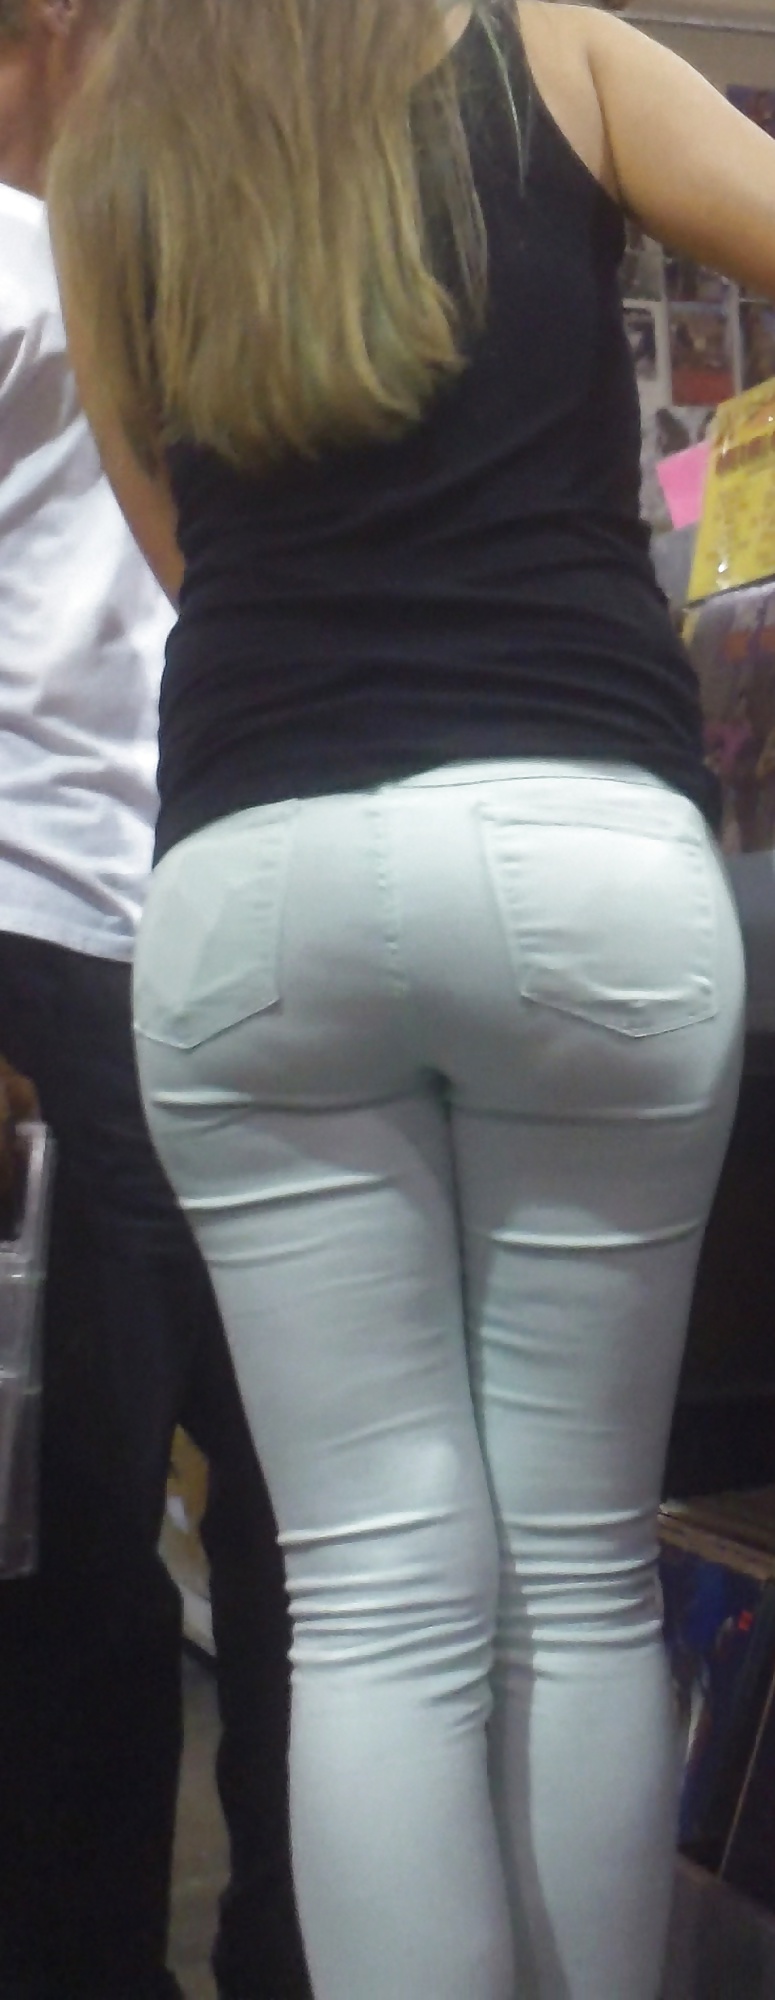 Big juicy teen ass & butt in jeans #32682035